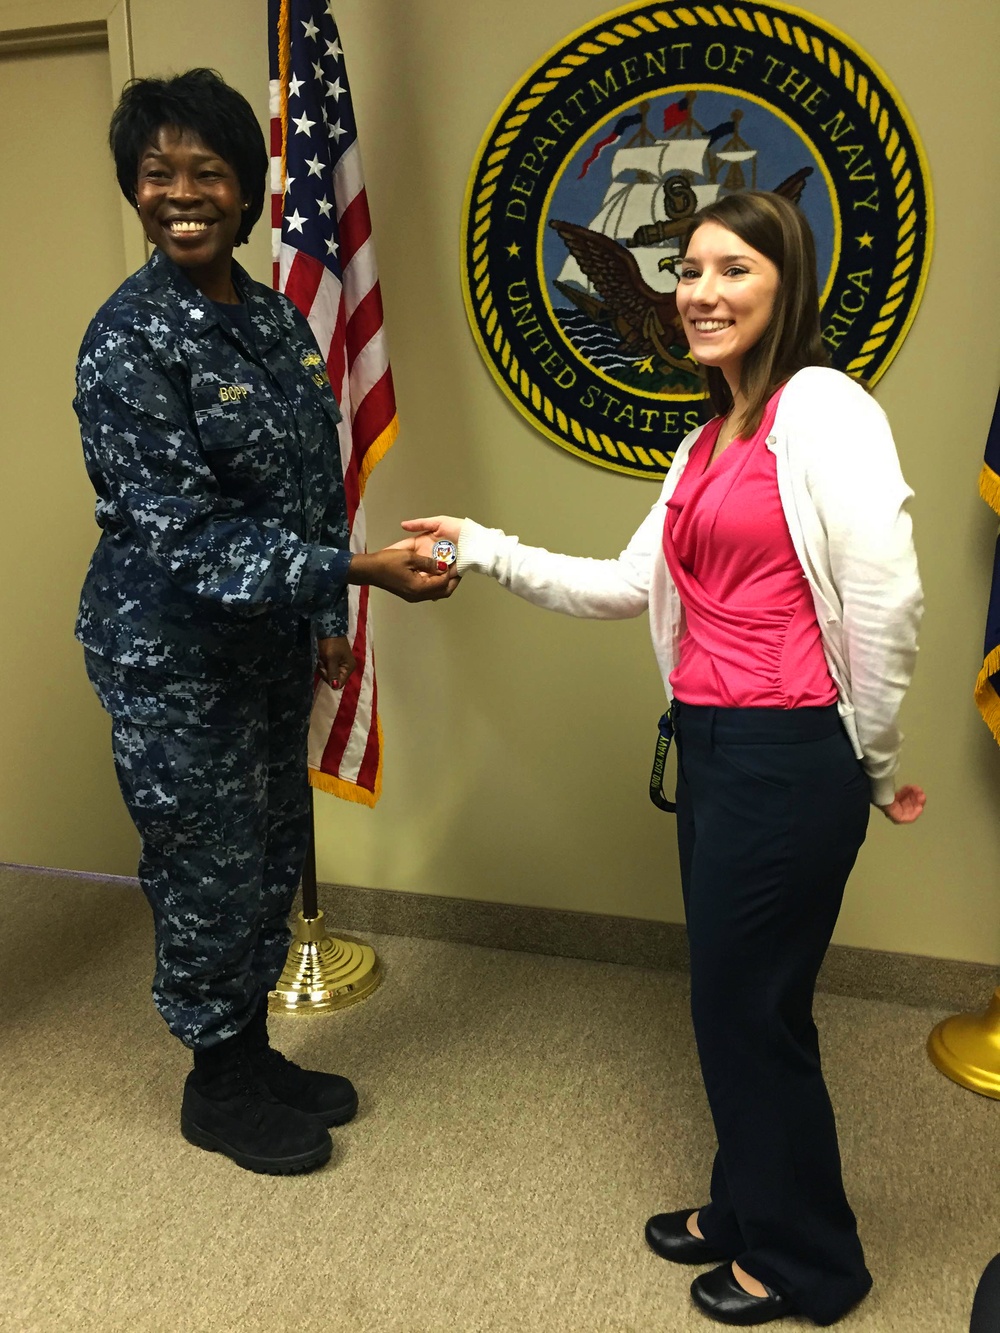 STEAM Academy of Warren teacher selected for US Navy Oceanography Officer Program